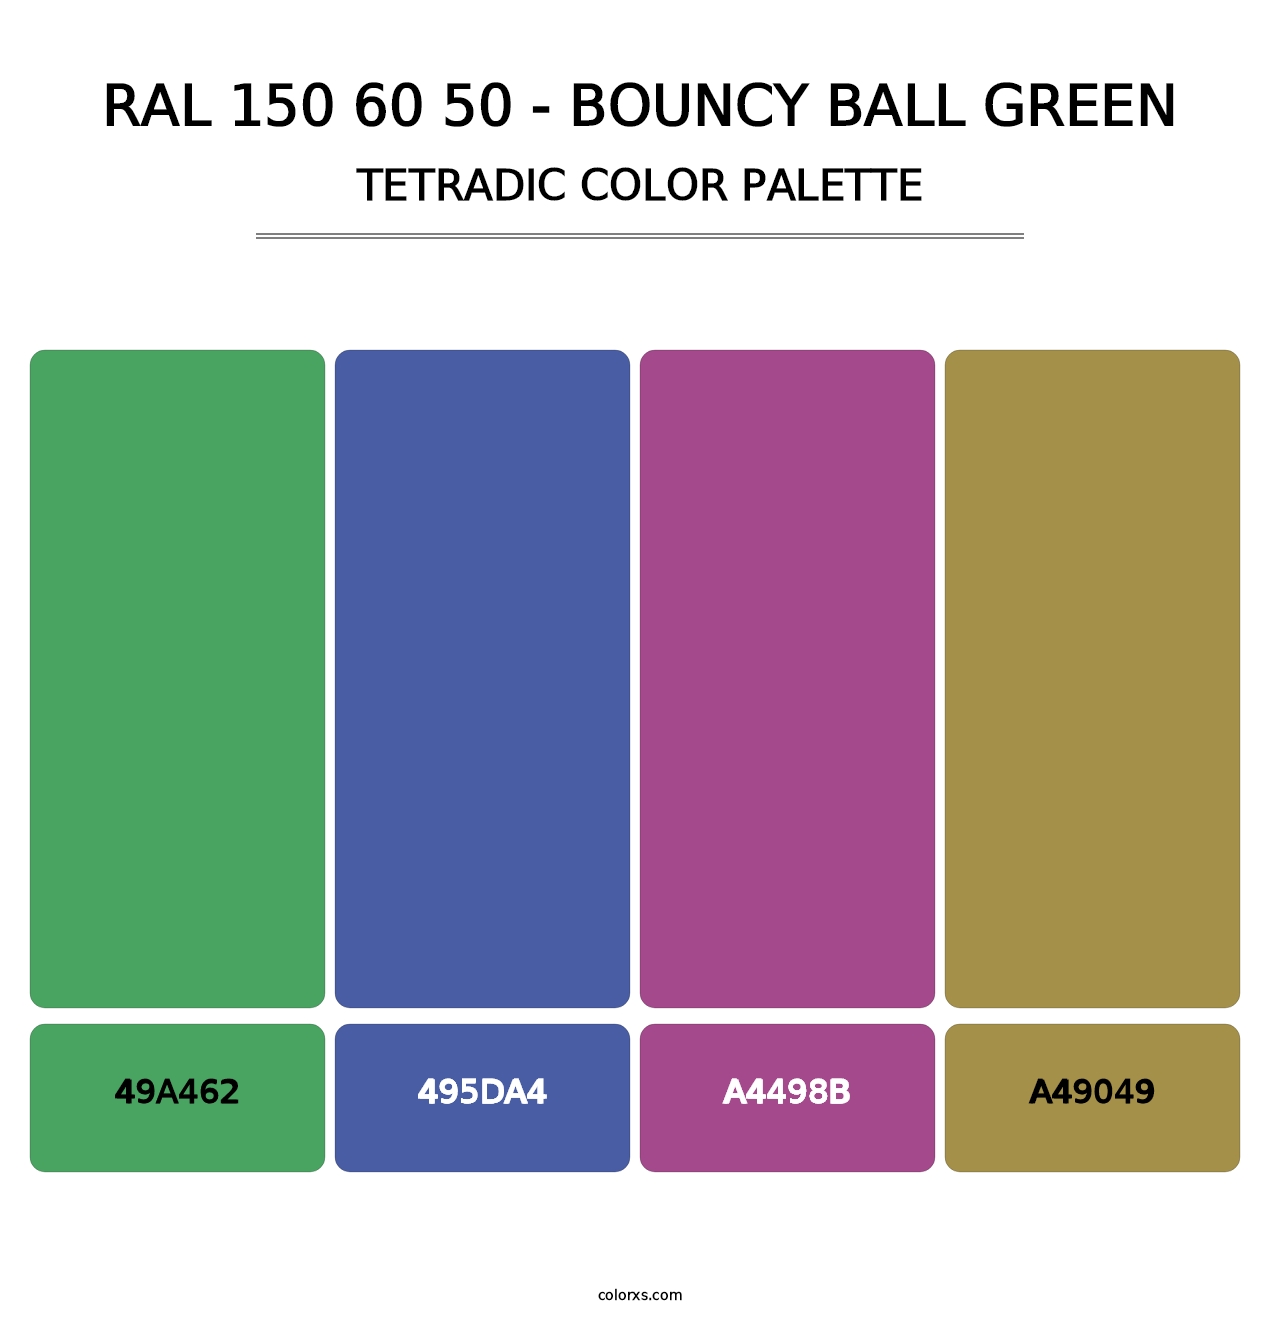 RAL 150 60 50 - Bouncy Ball Green - Tetradic Color Palette